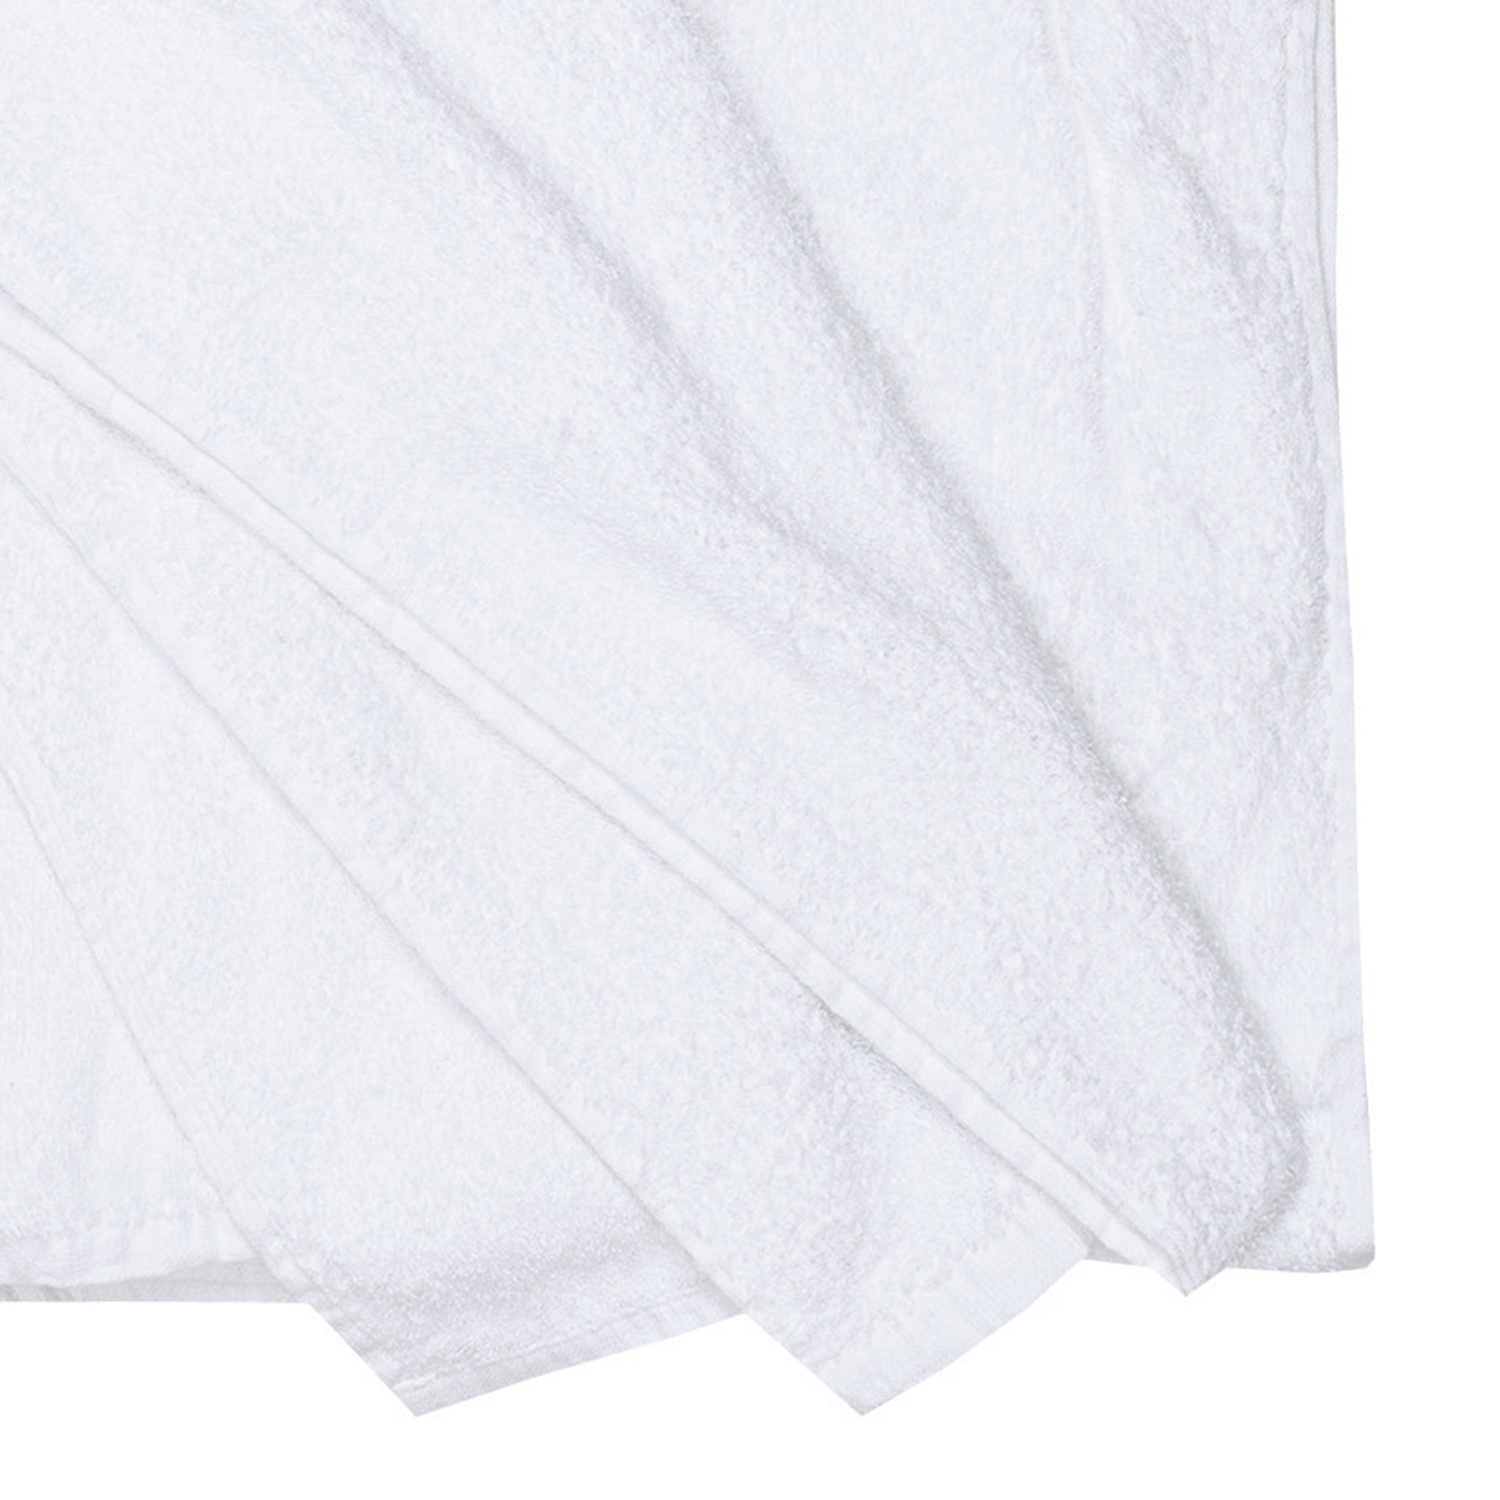 Bath towel series Helsinki in white by Adamo in large sizes 100x220 cm or 155x220 cm